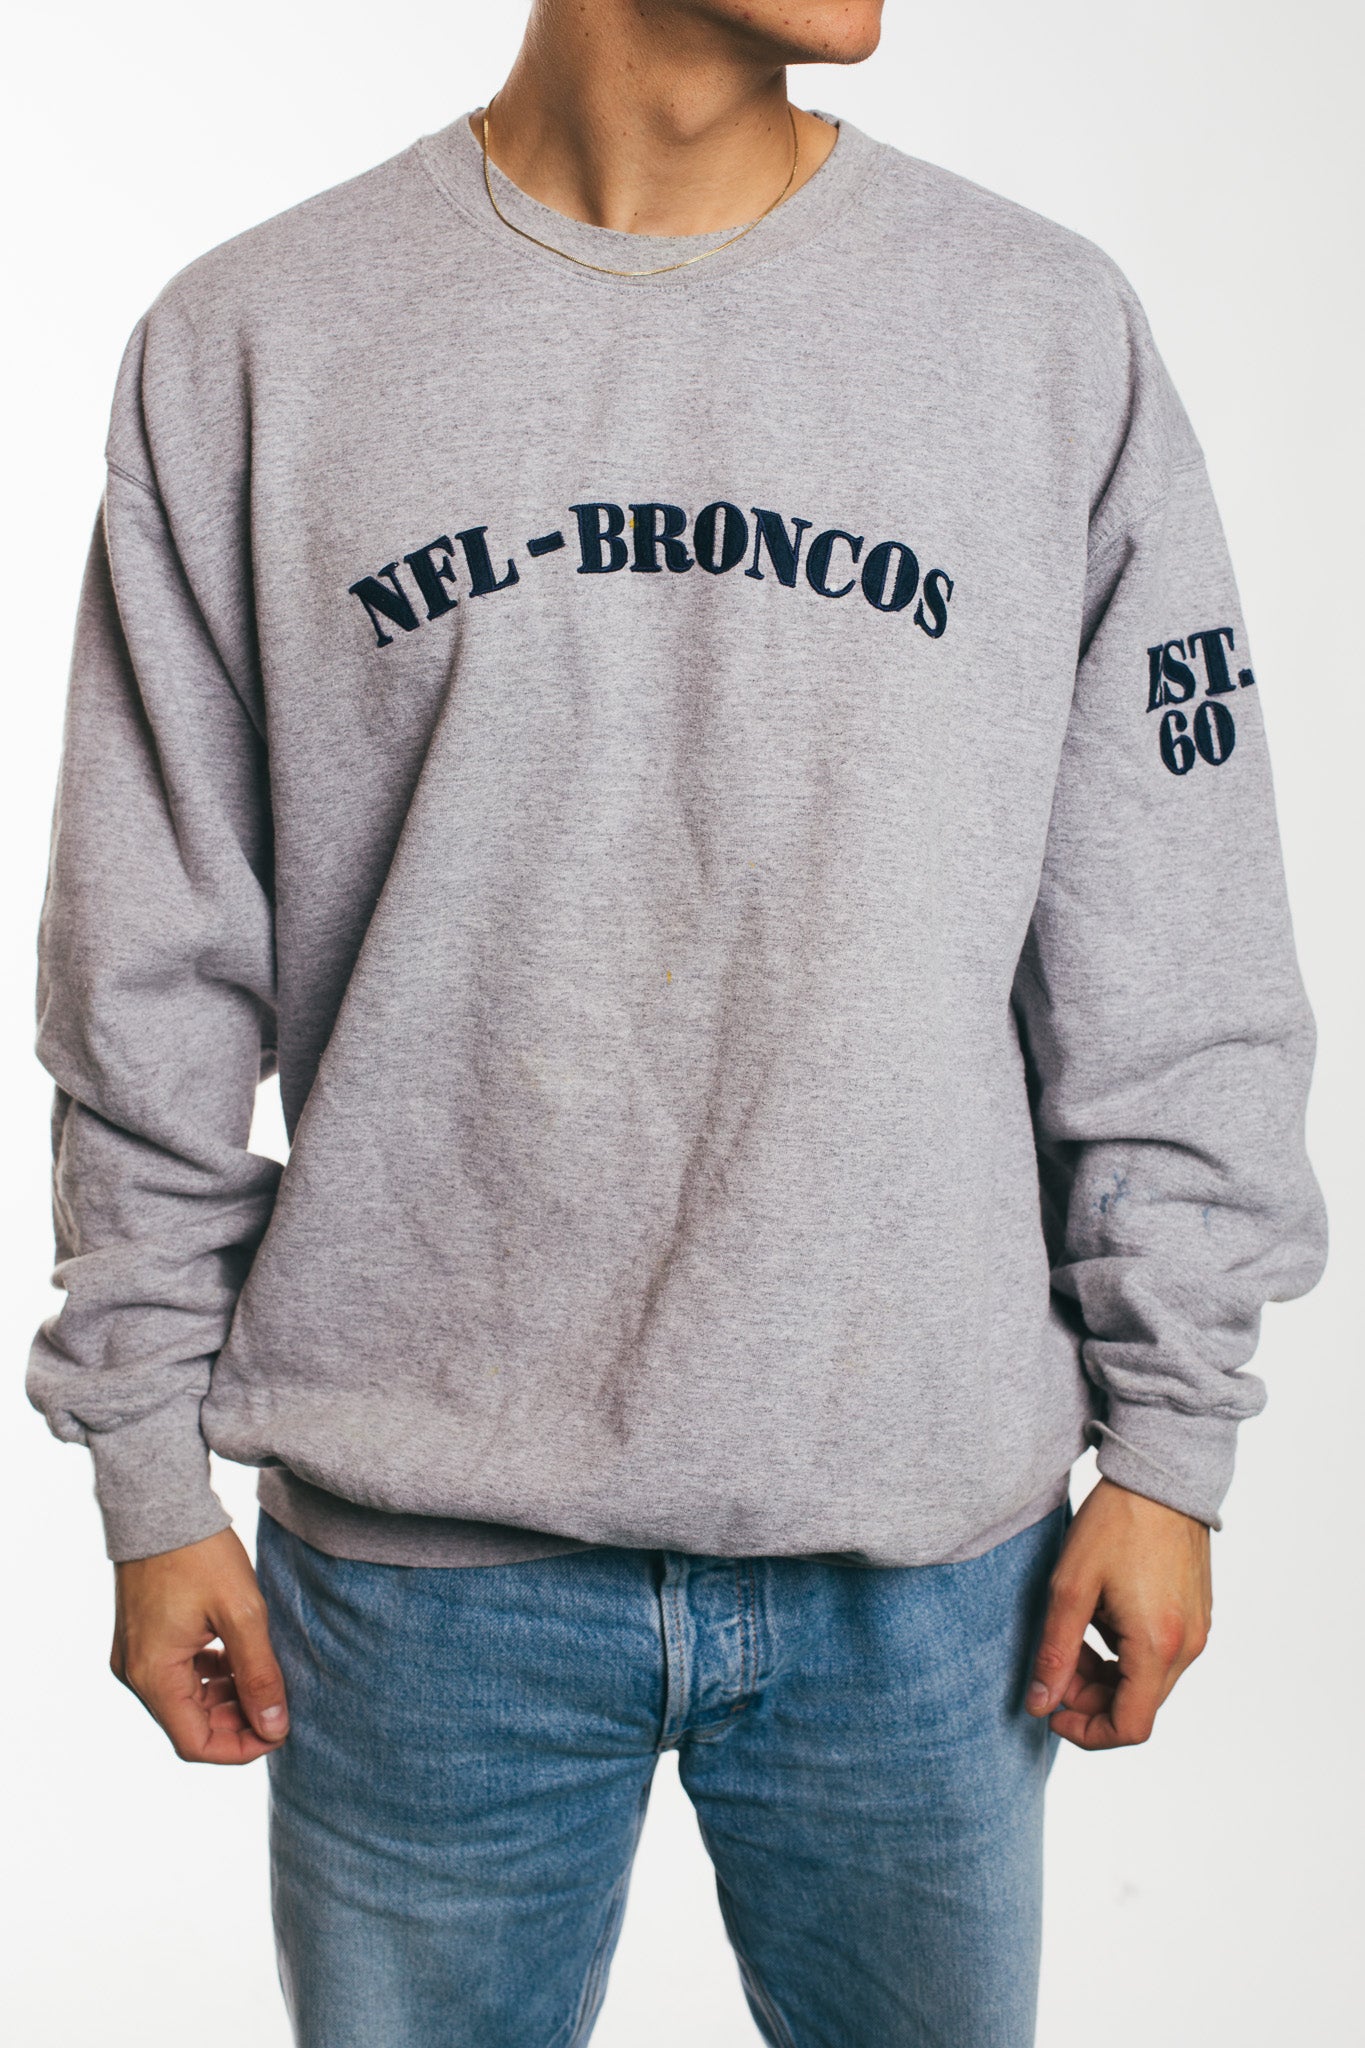 New Broncos - Sweatshirt